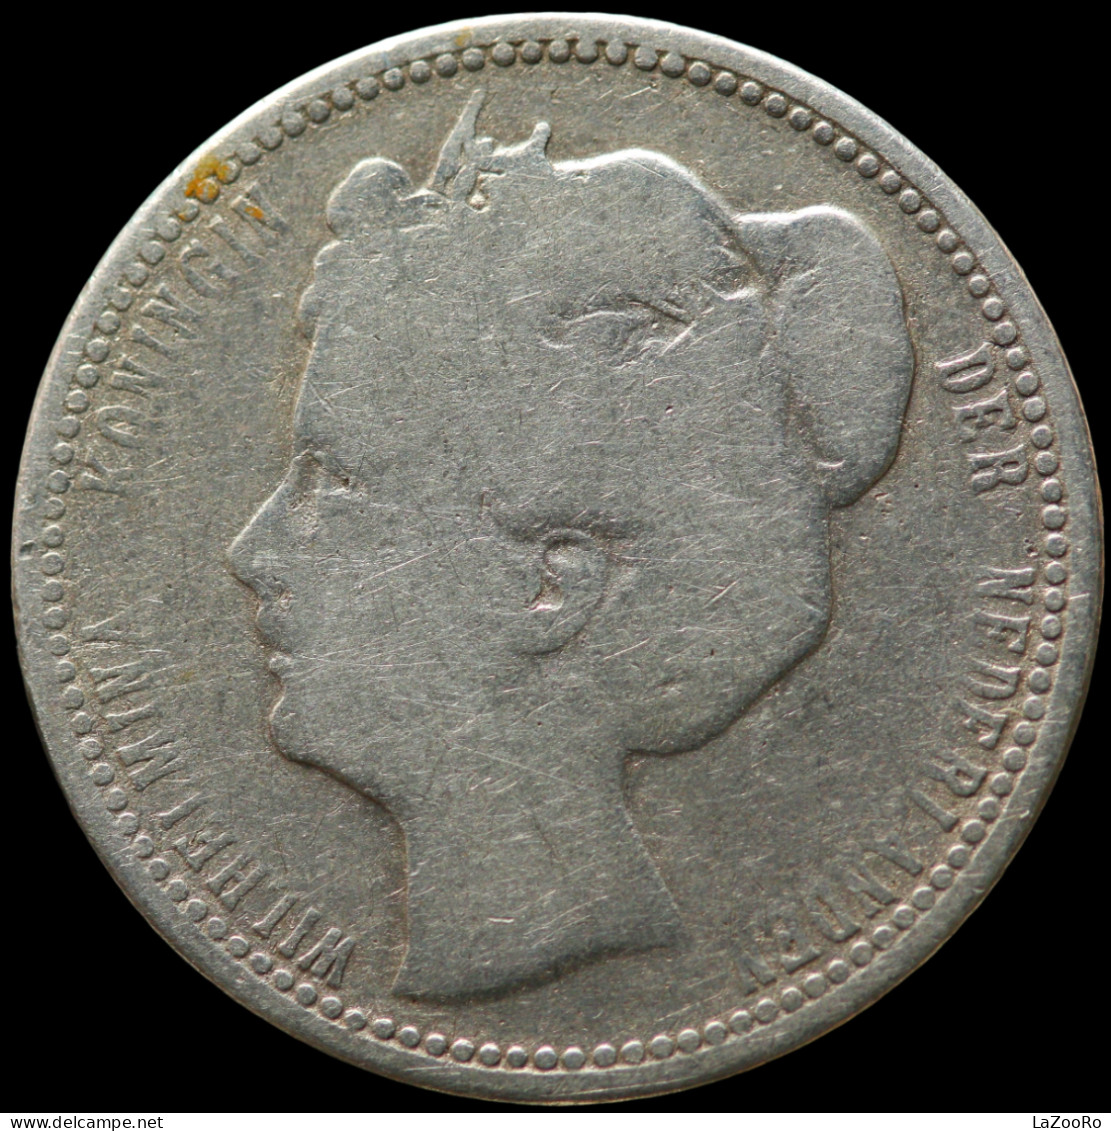 LaZooRo: Netherlands 25 Cents 1905 VF - Silver - 25 Centavos